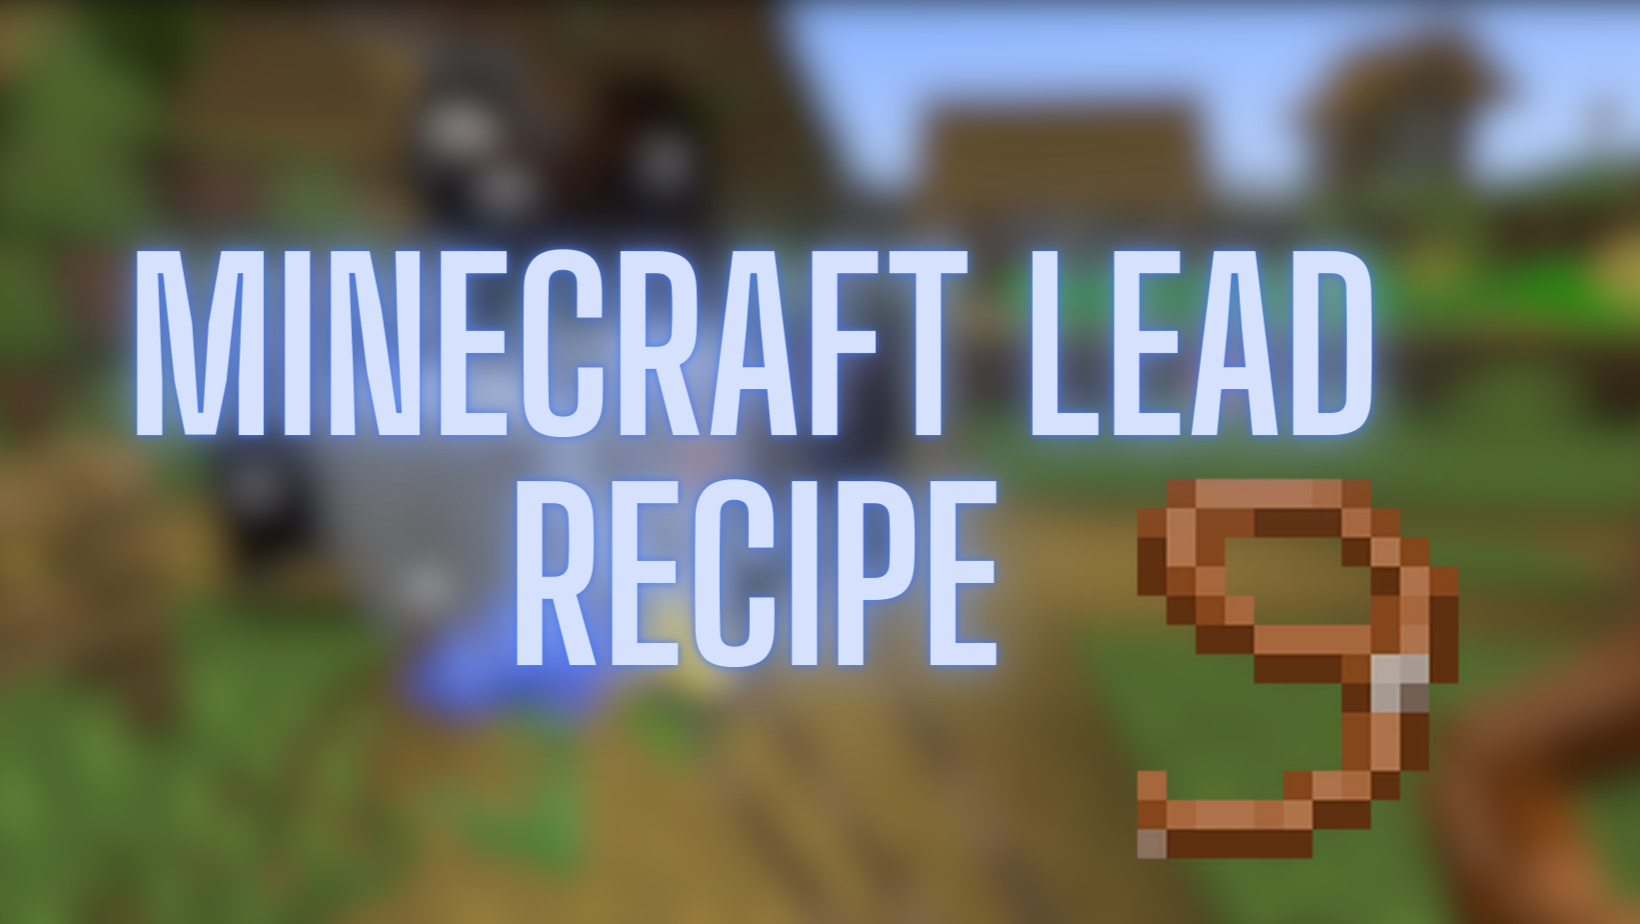 minecraft lead recipe